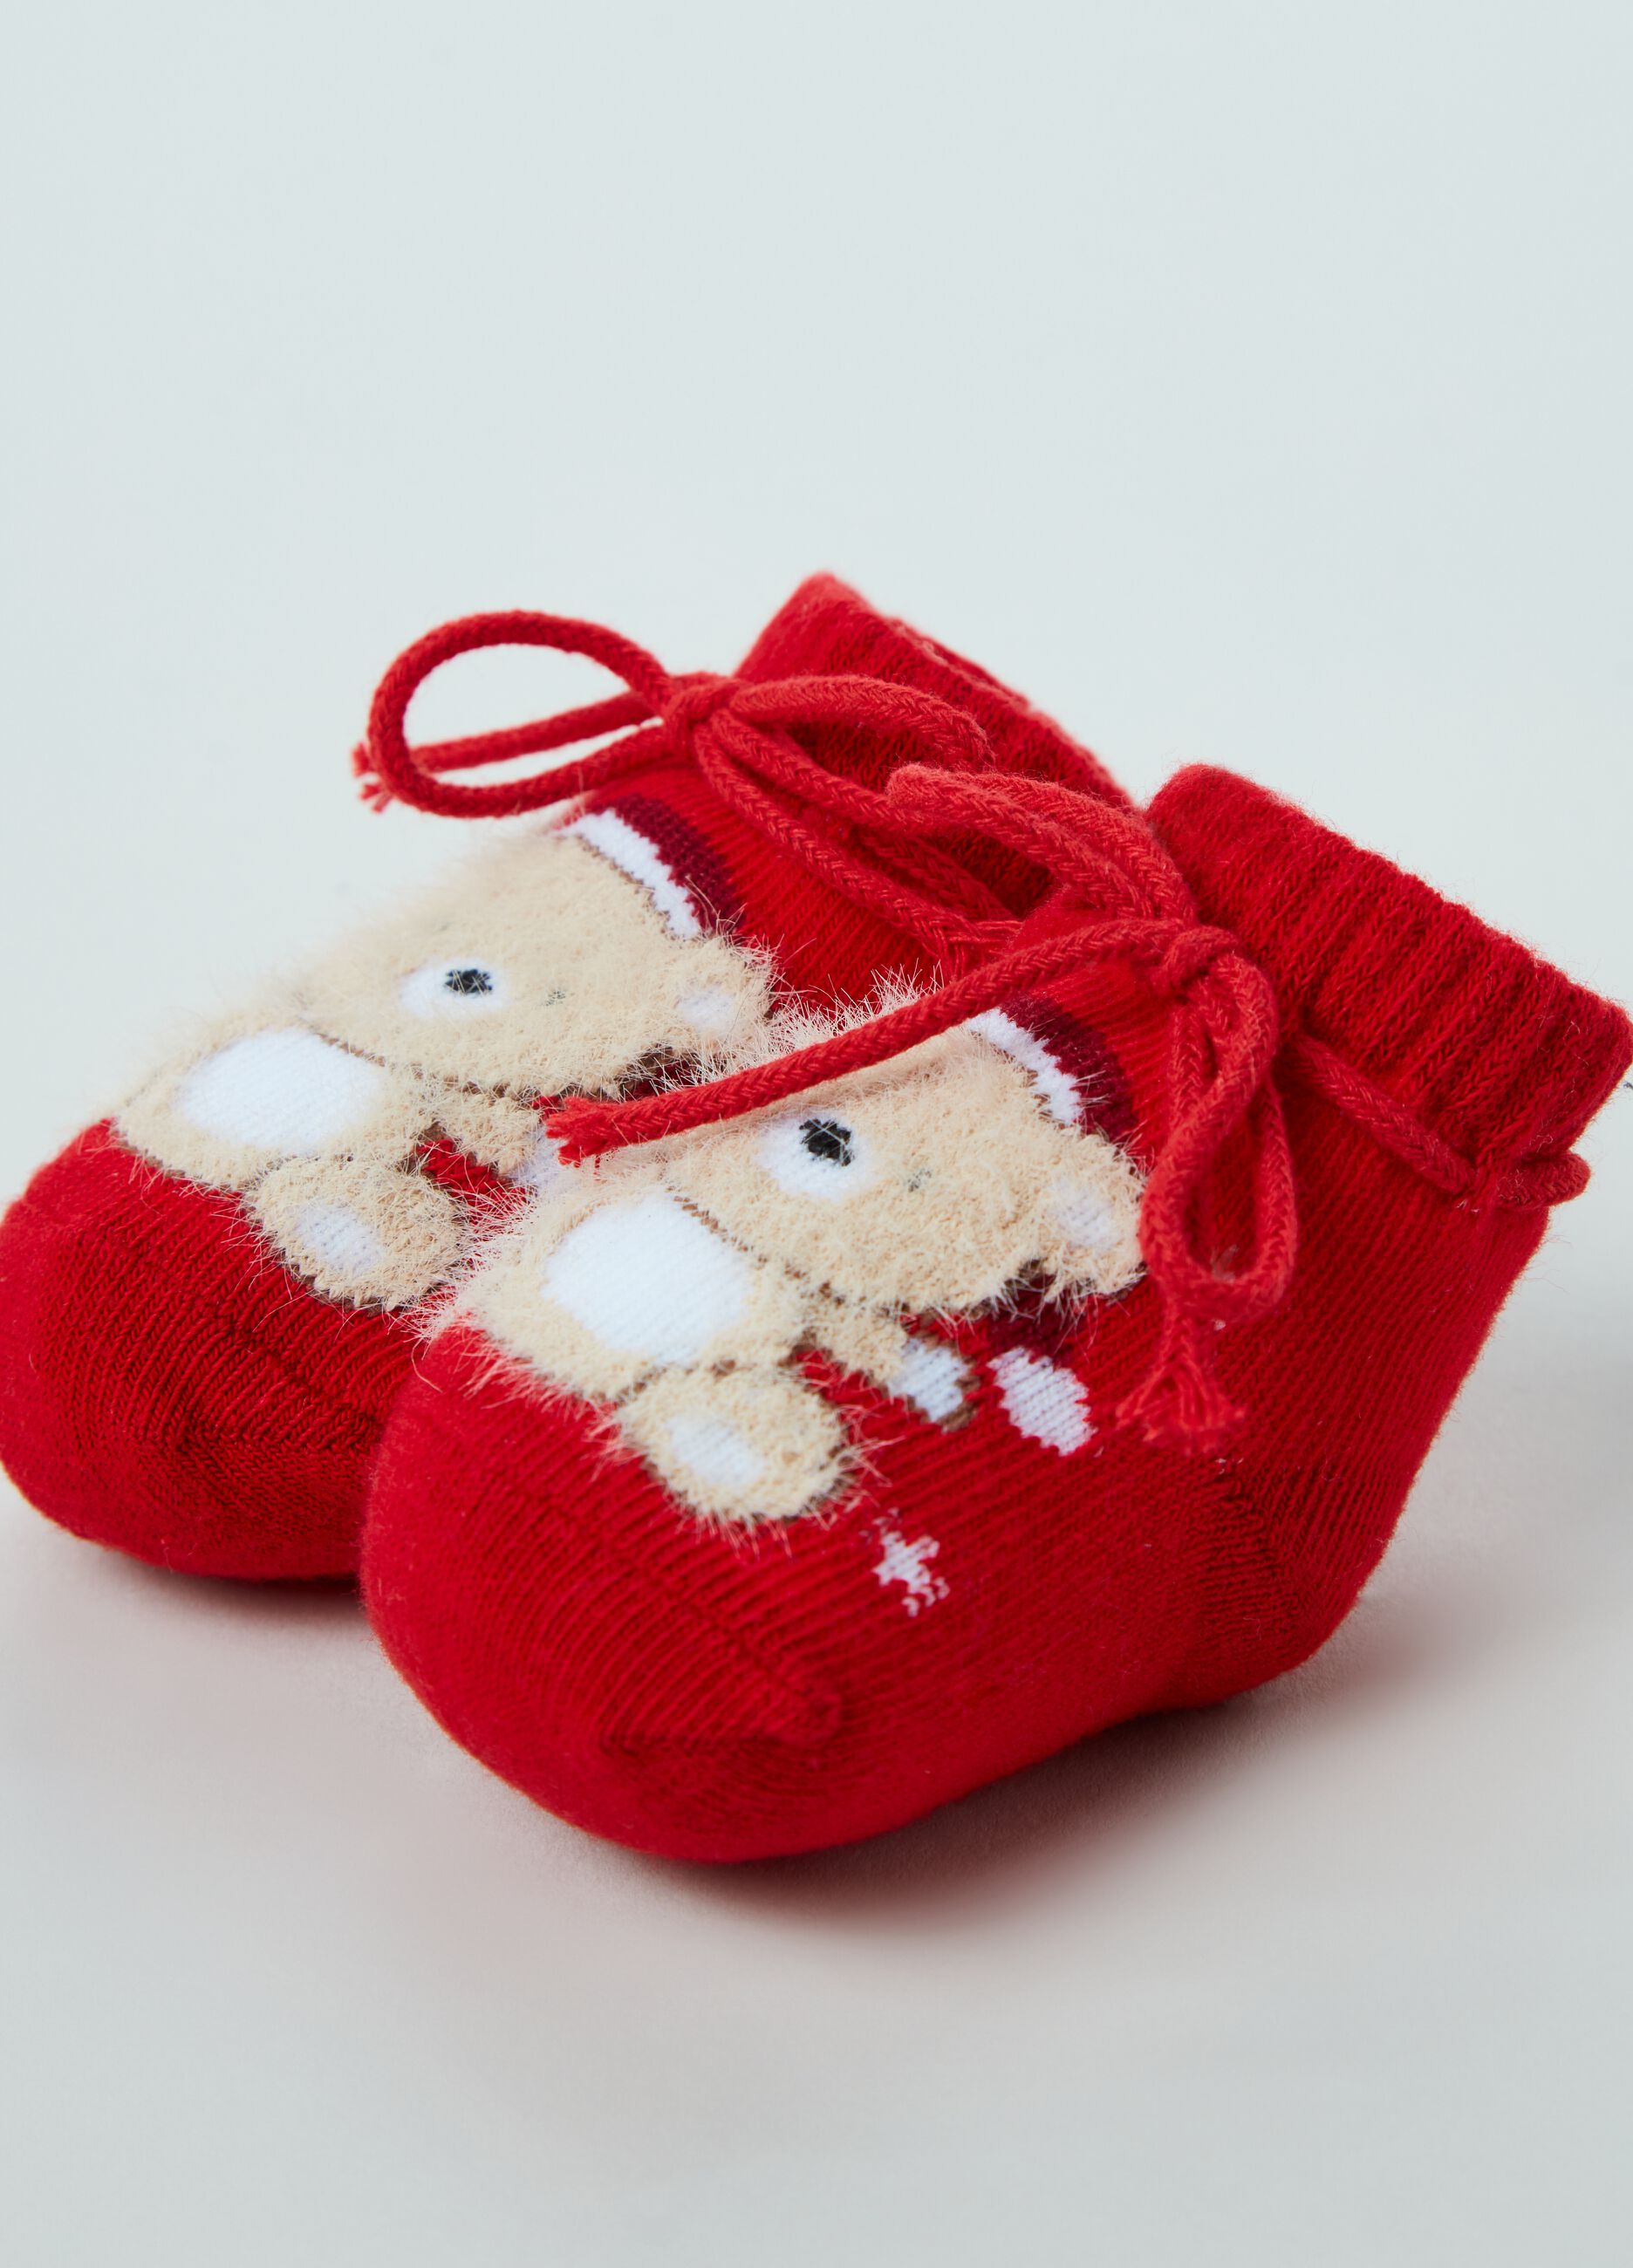 Shoes with Christmas teddy bear design